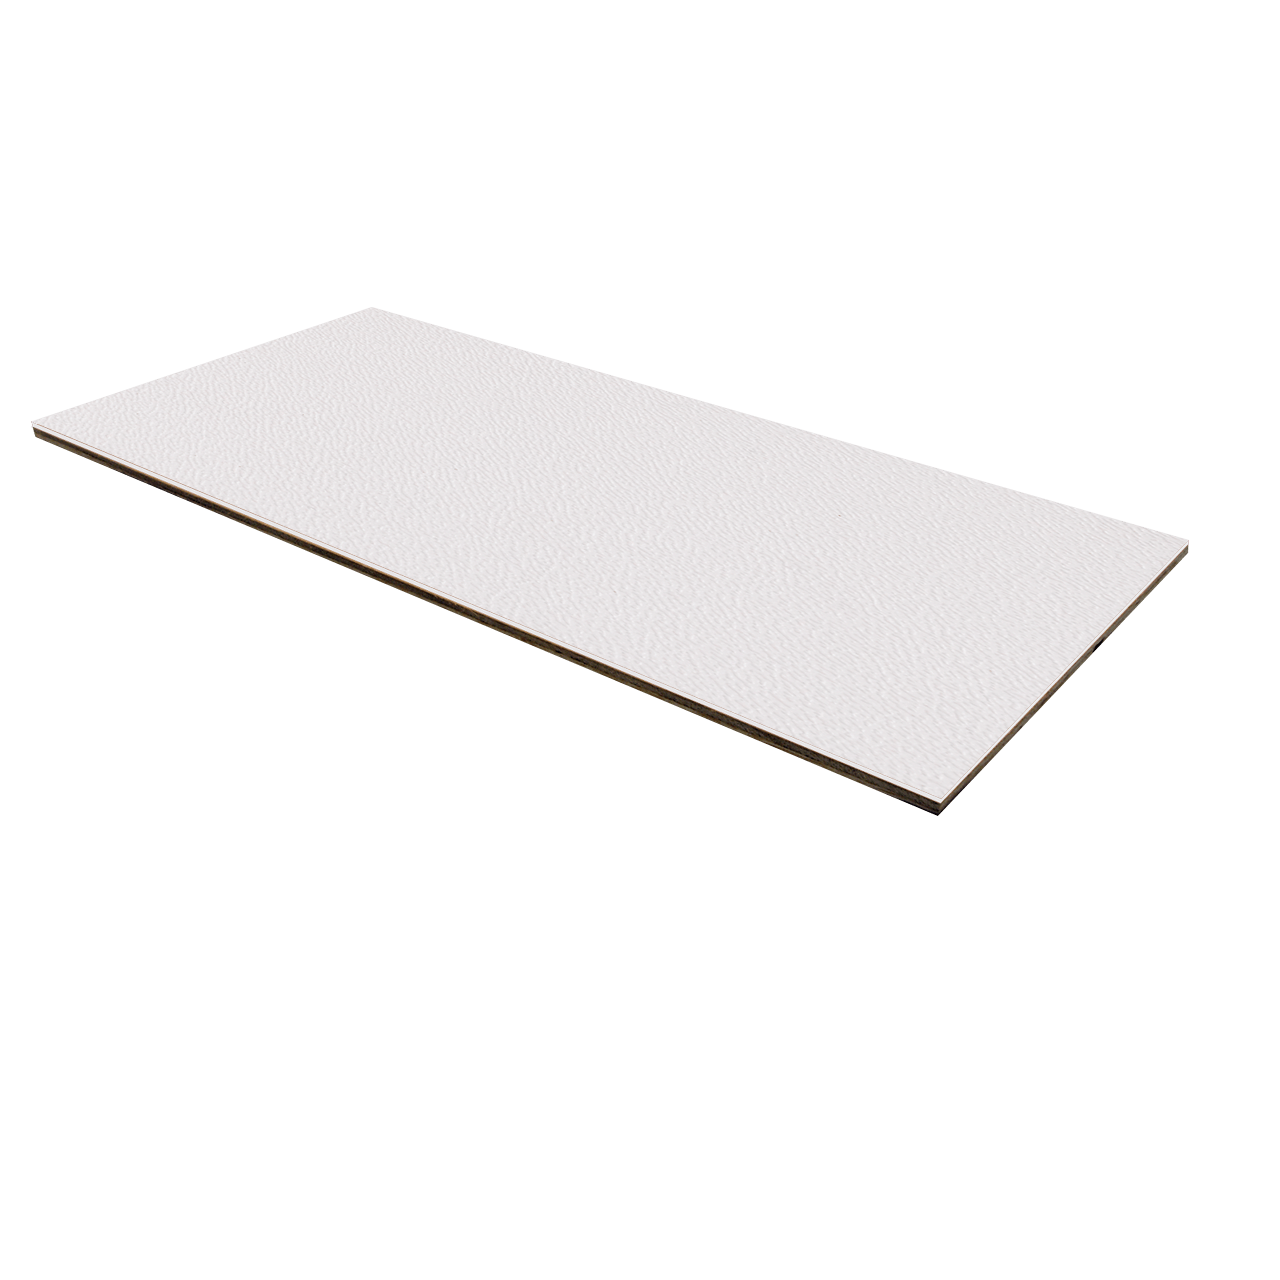 TCH - 1/8 Luan Plywood ABS Laminate - White